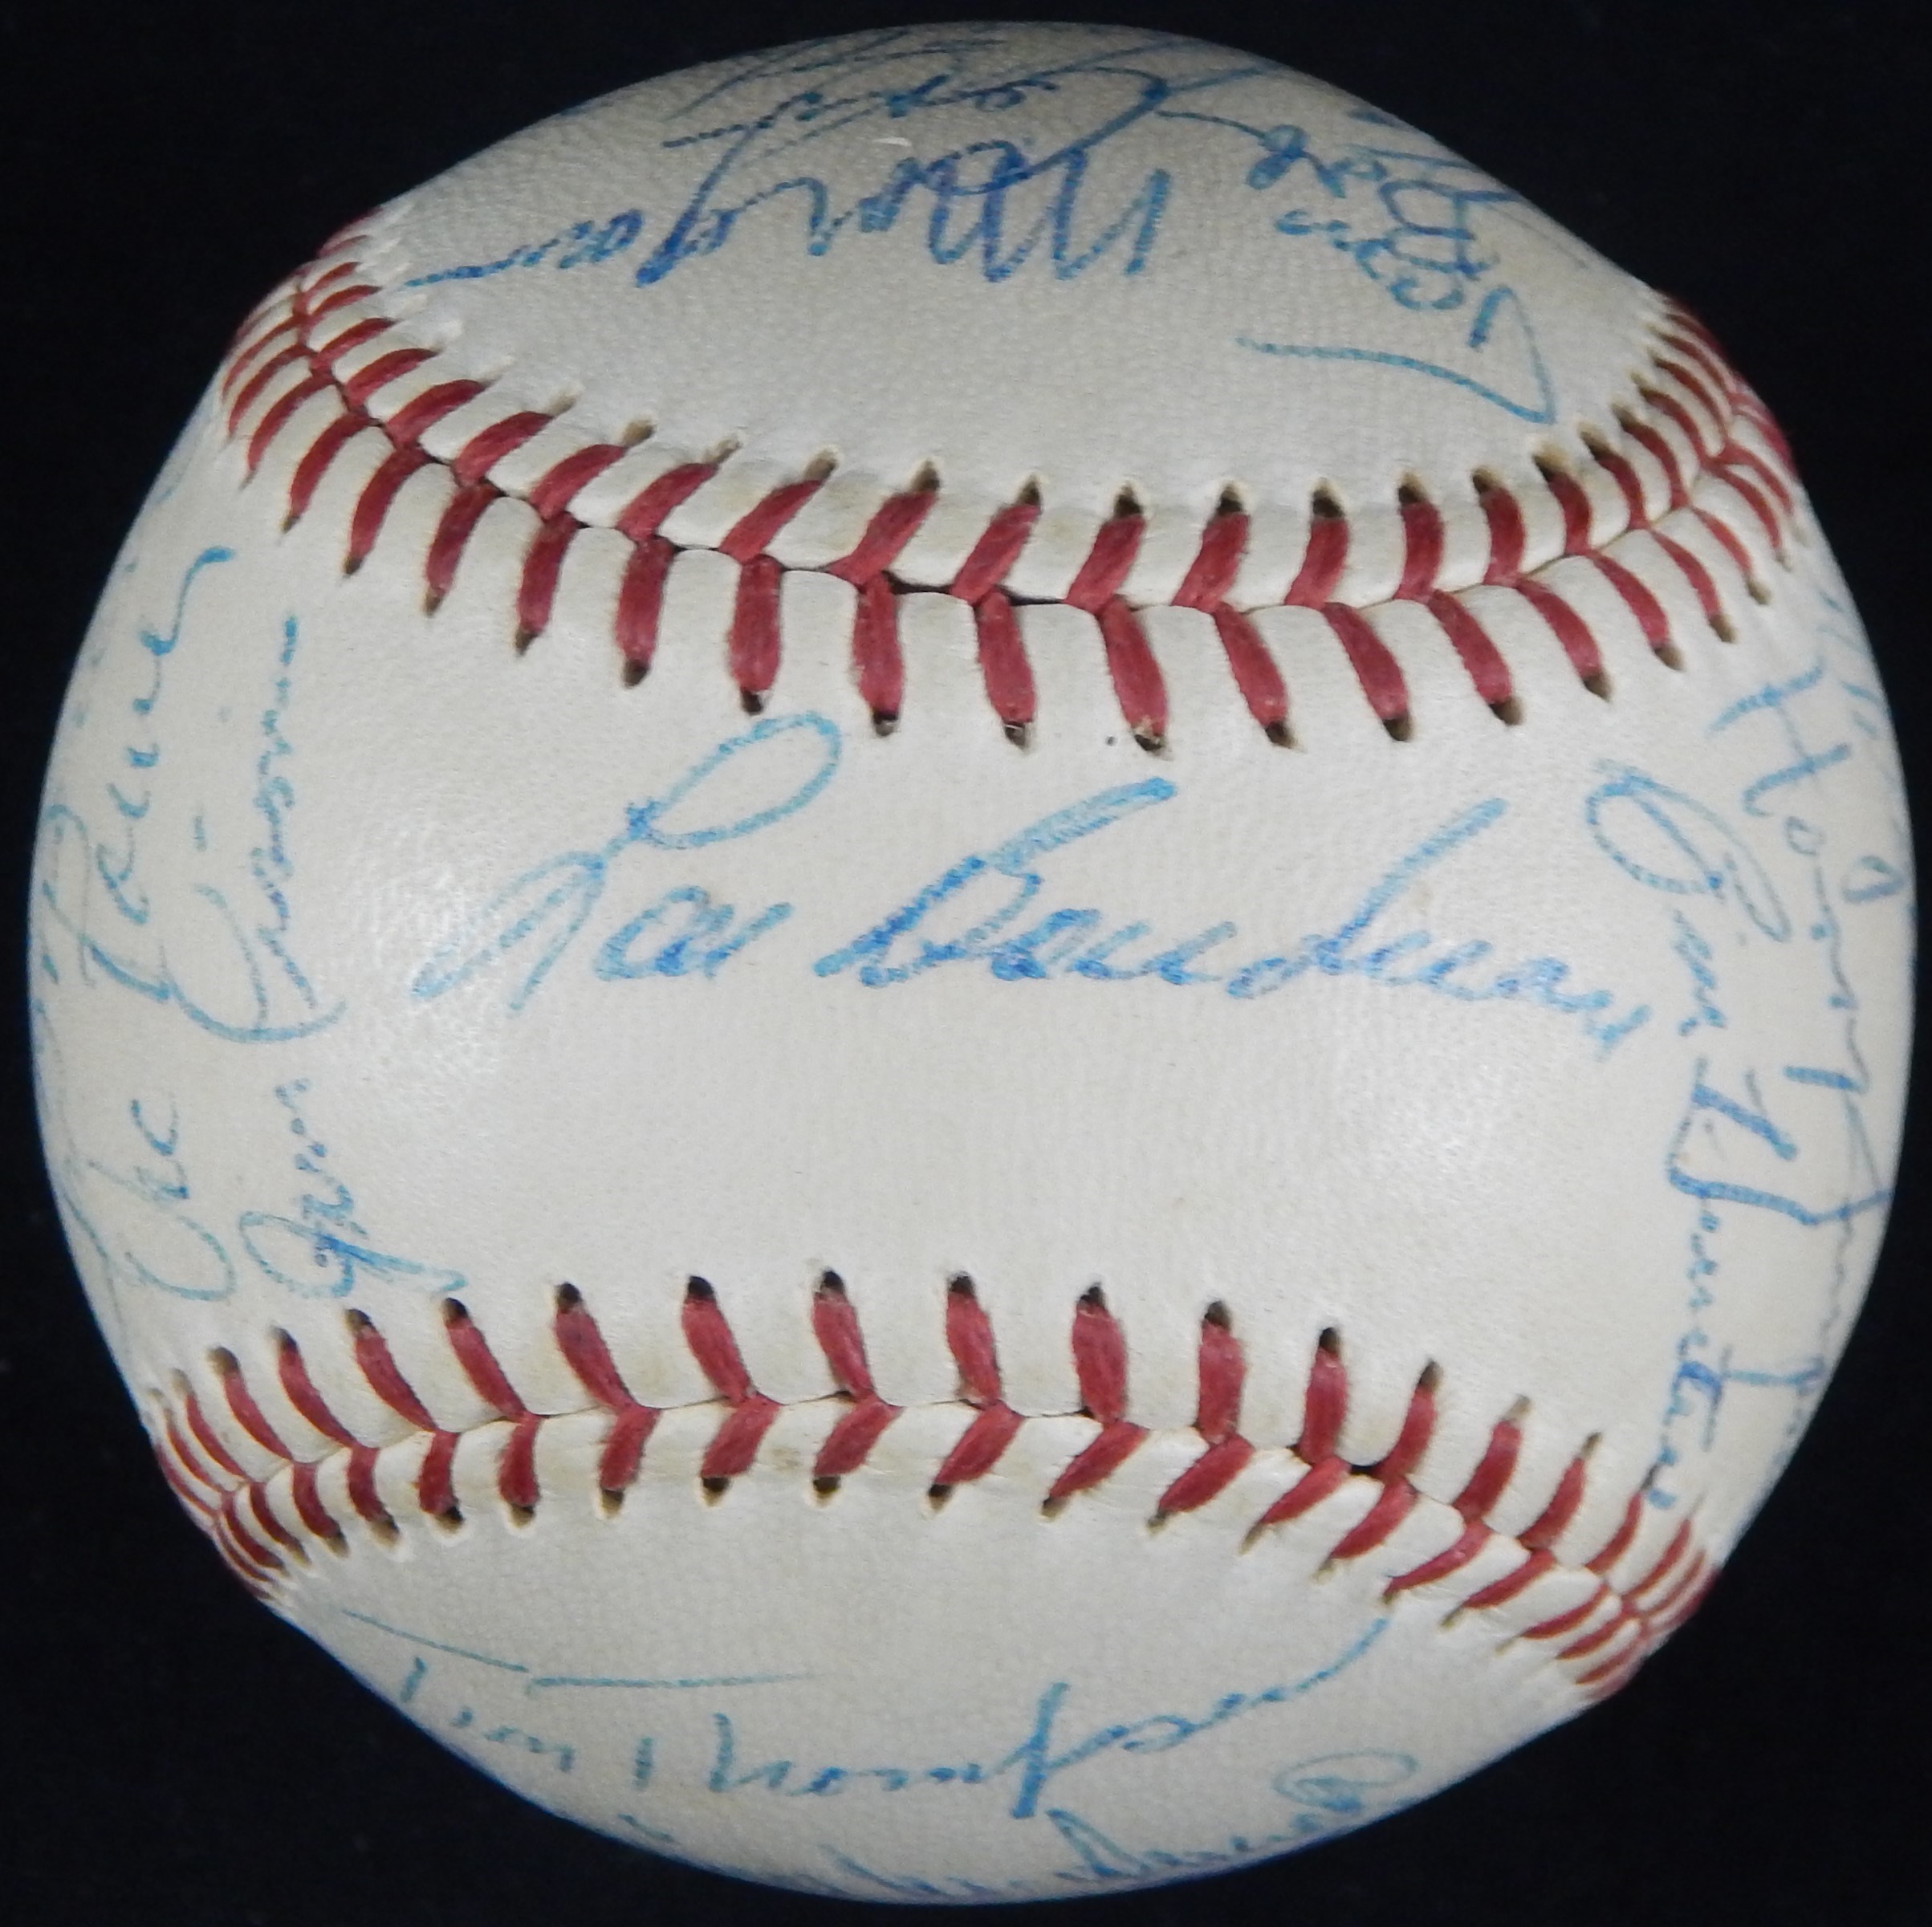 - 1957 Kansas City Athletics Team Signed Baseball - JSA LOA